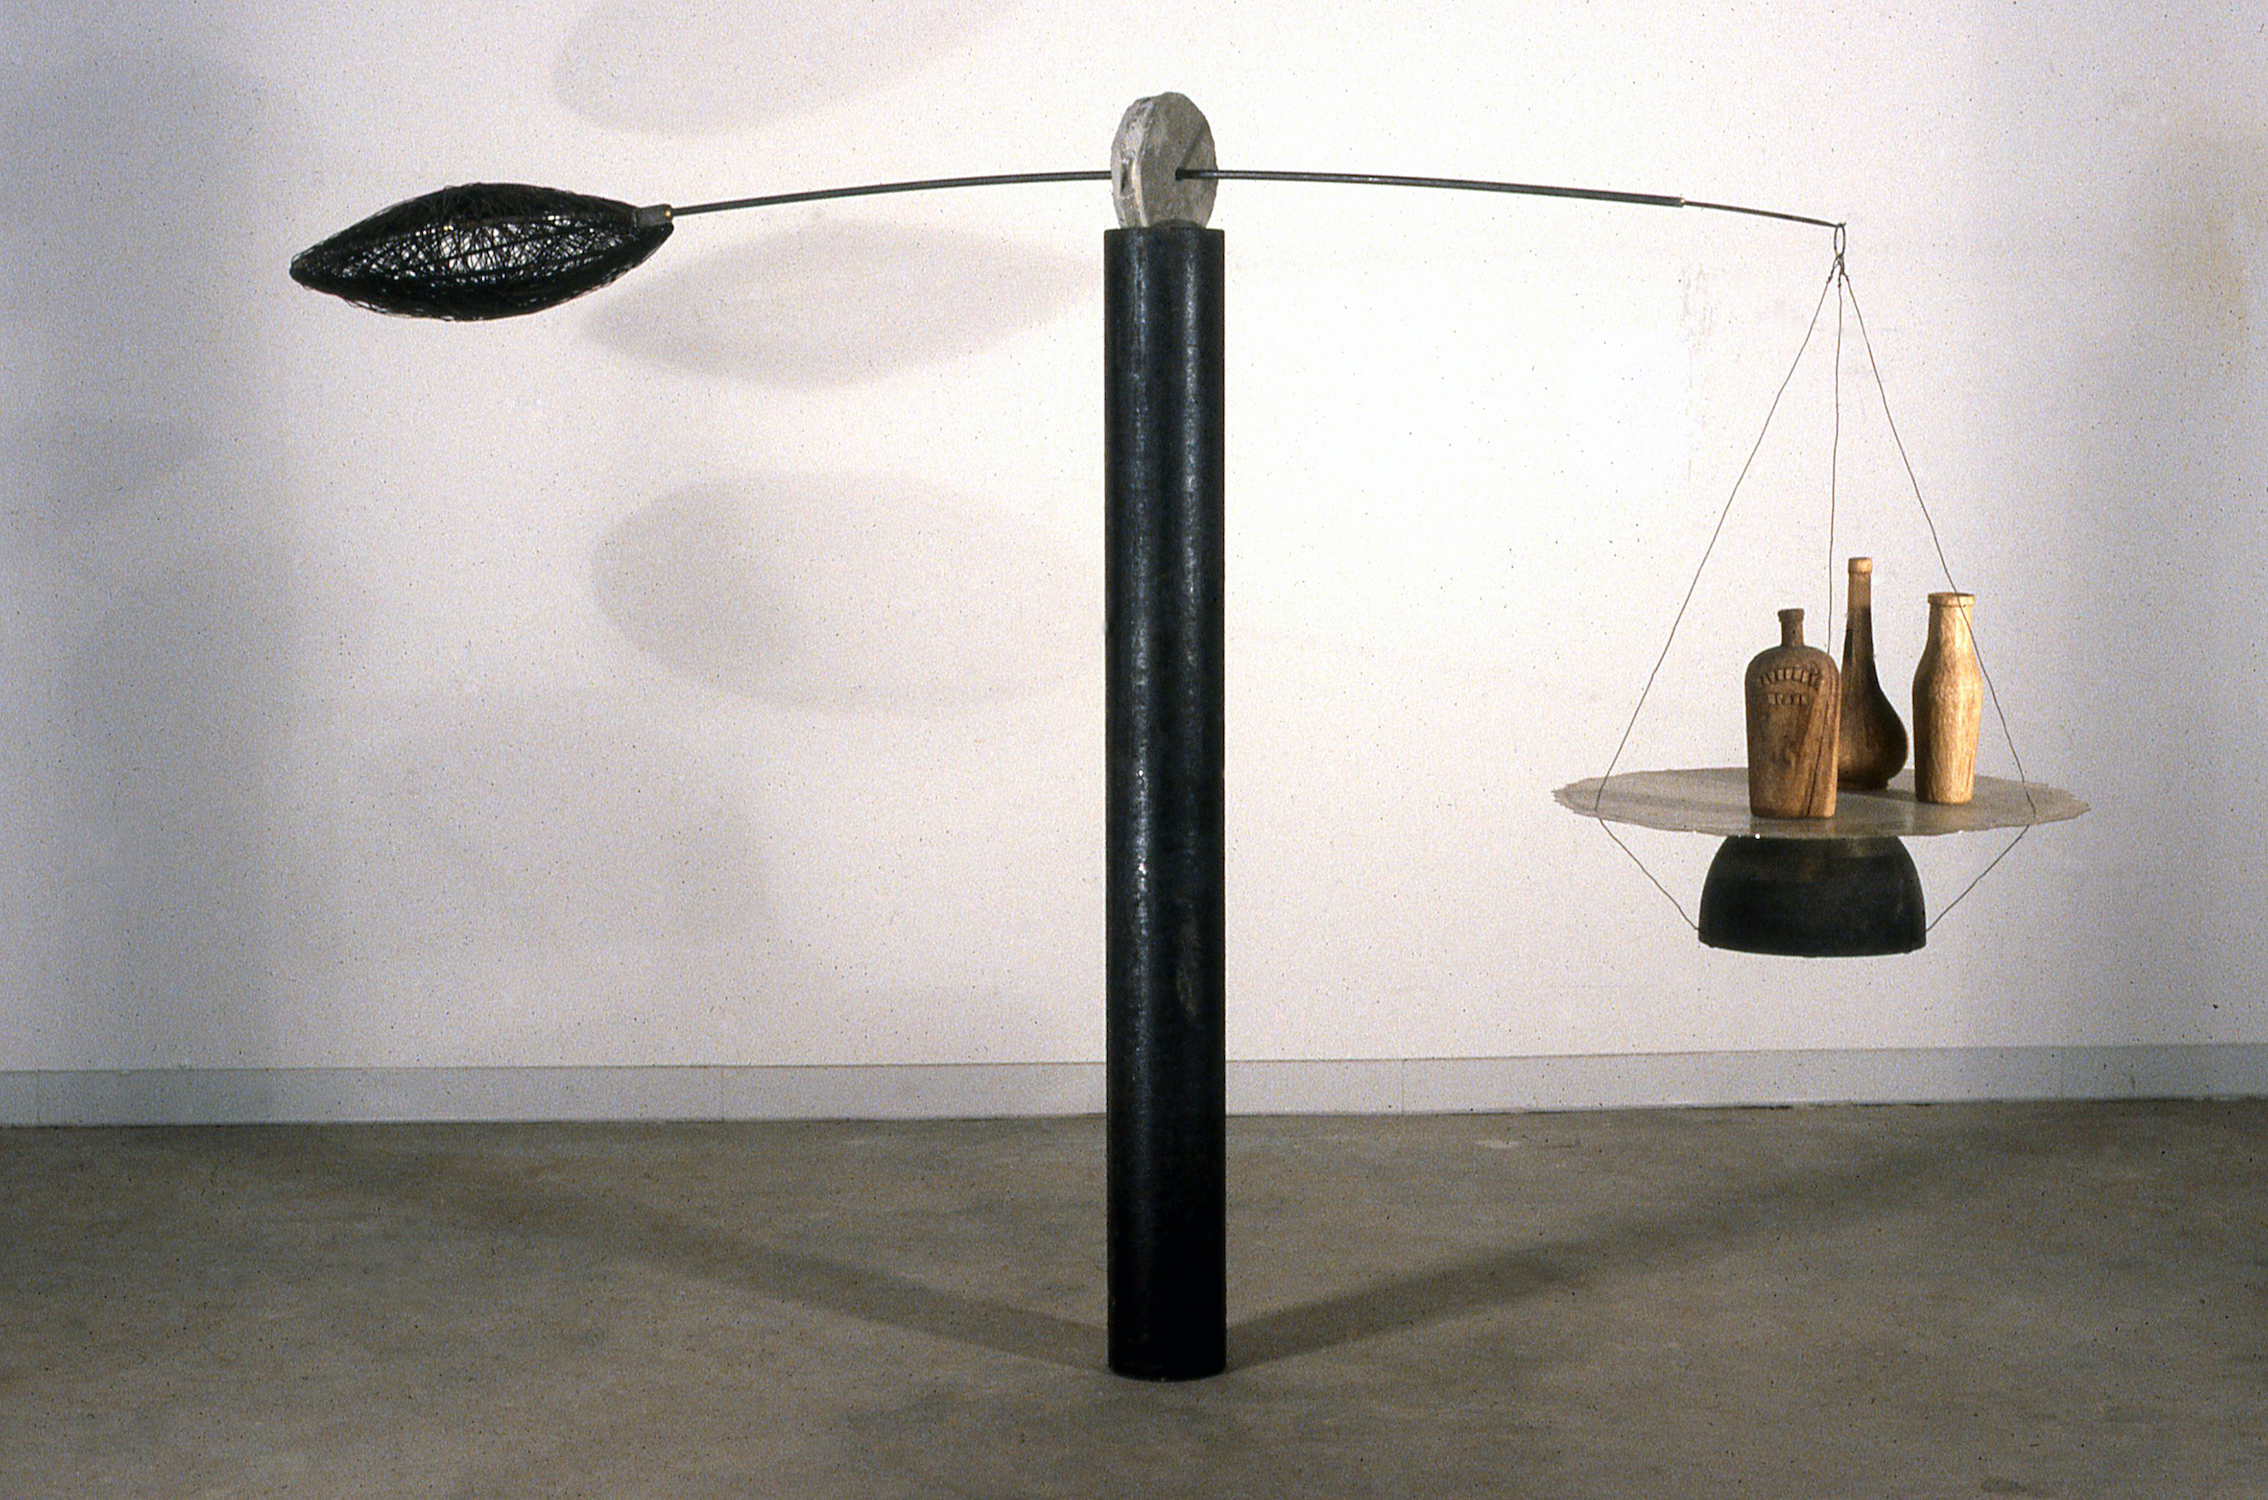  Still Life (1999), steel, stone, wood, wire, resin 